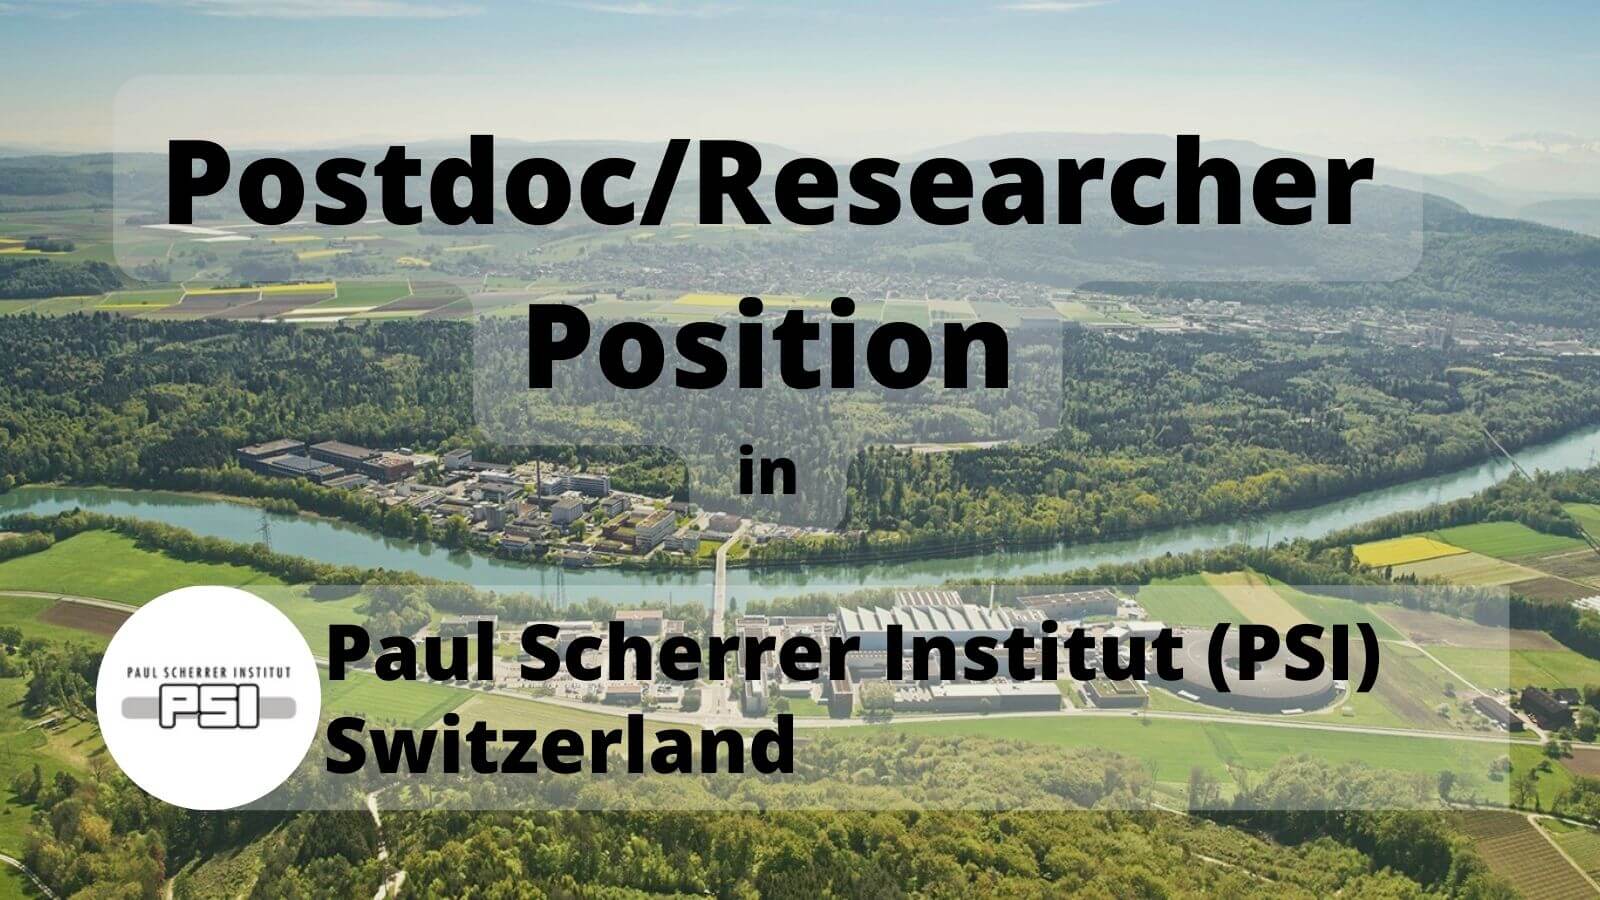 Postdoc Position in PSI Switzerland